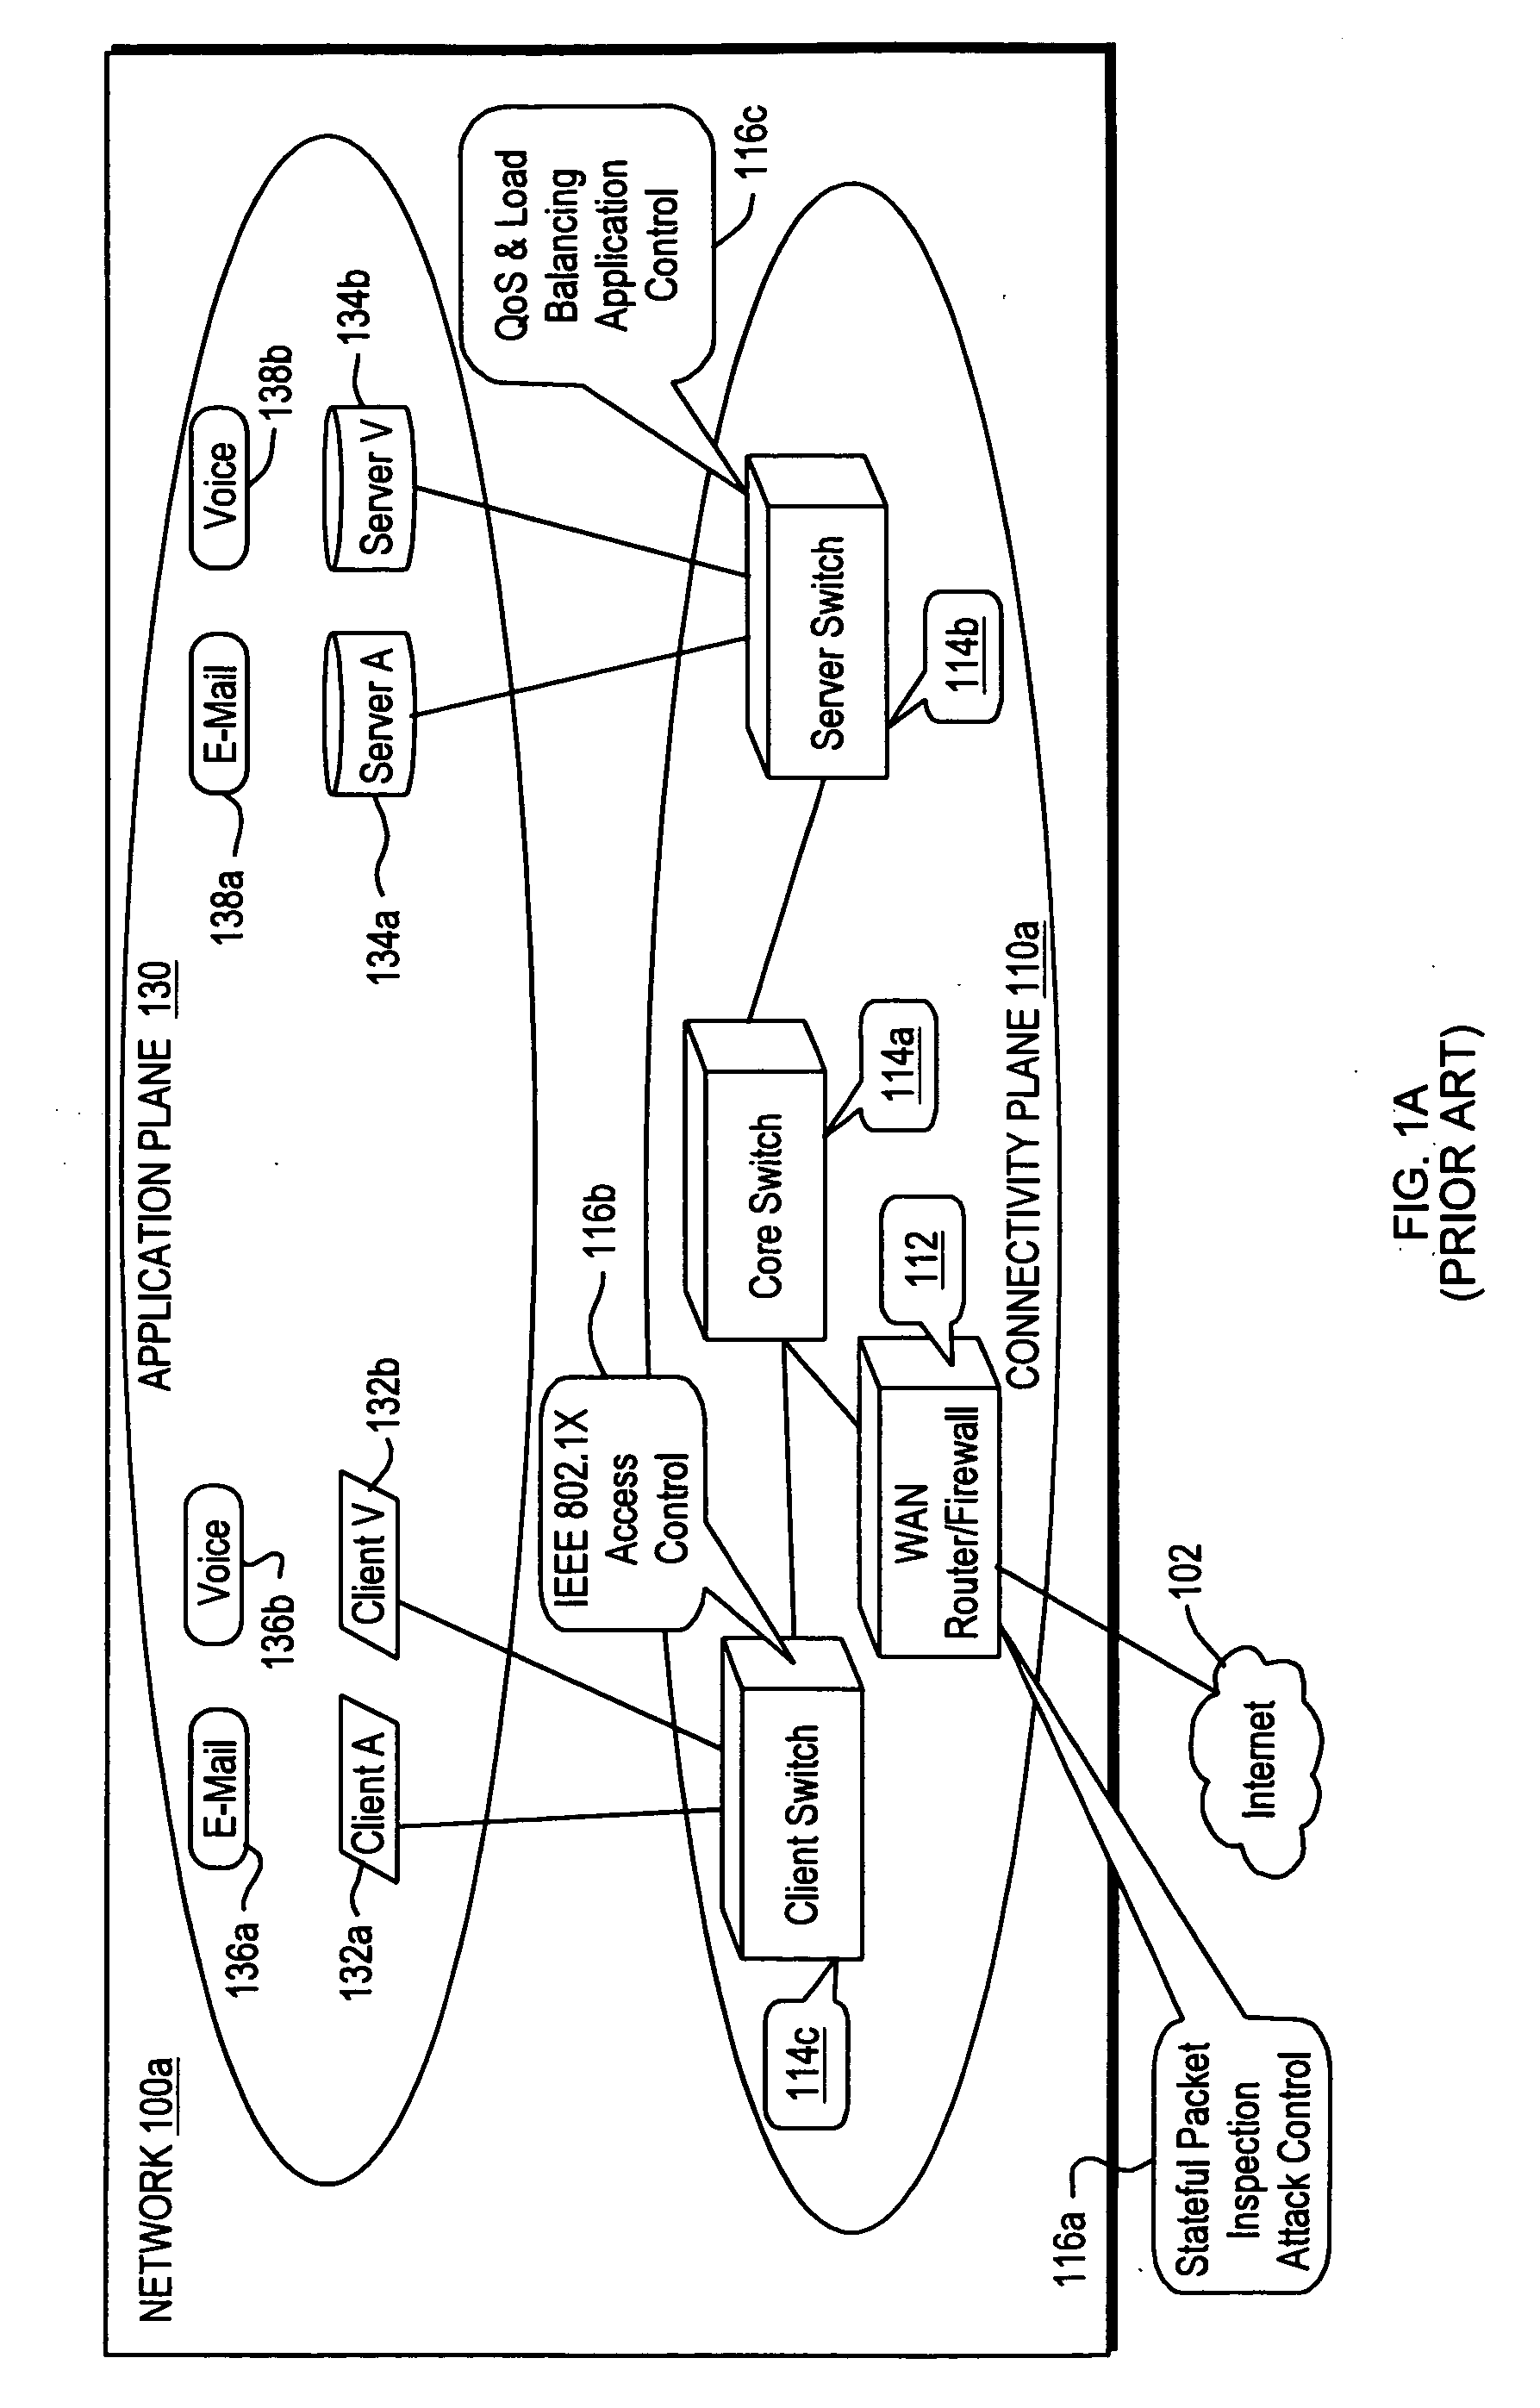 Bi-planar network architecture